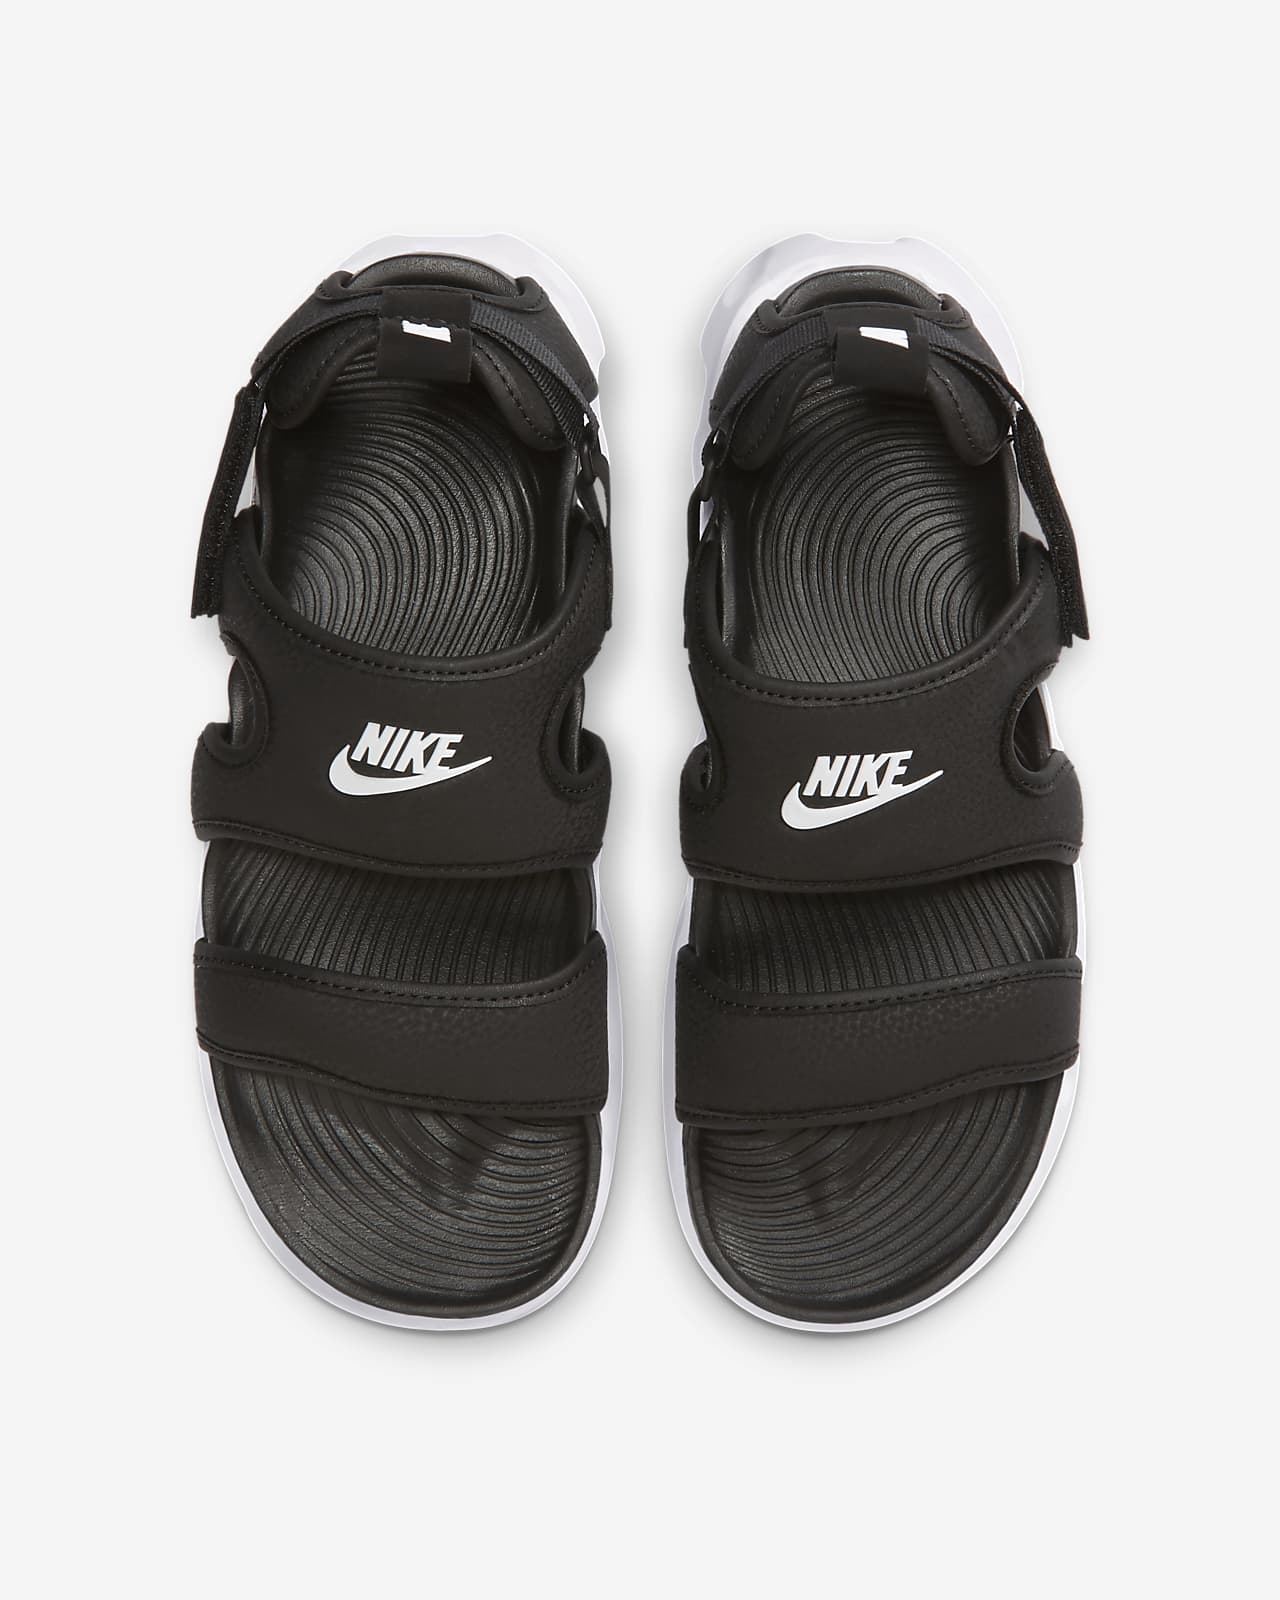 nike closed sandals